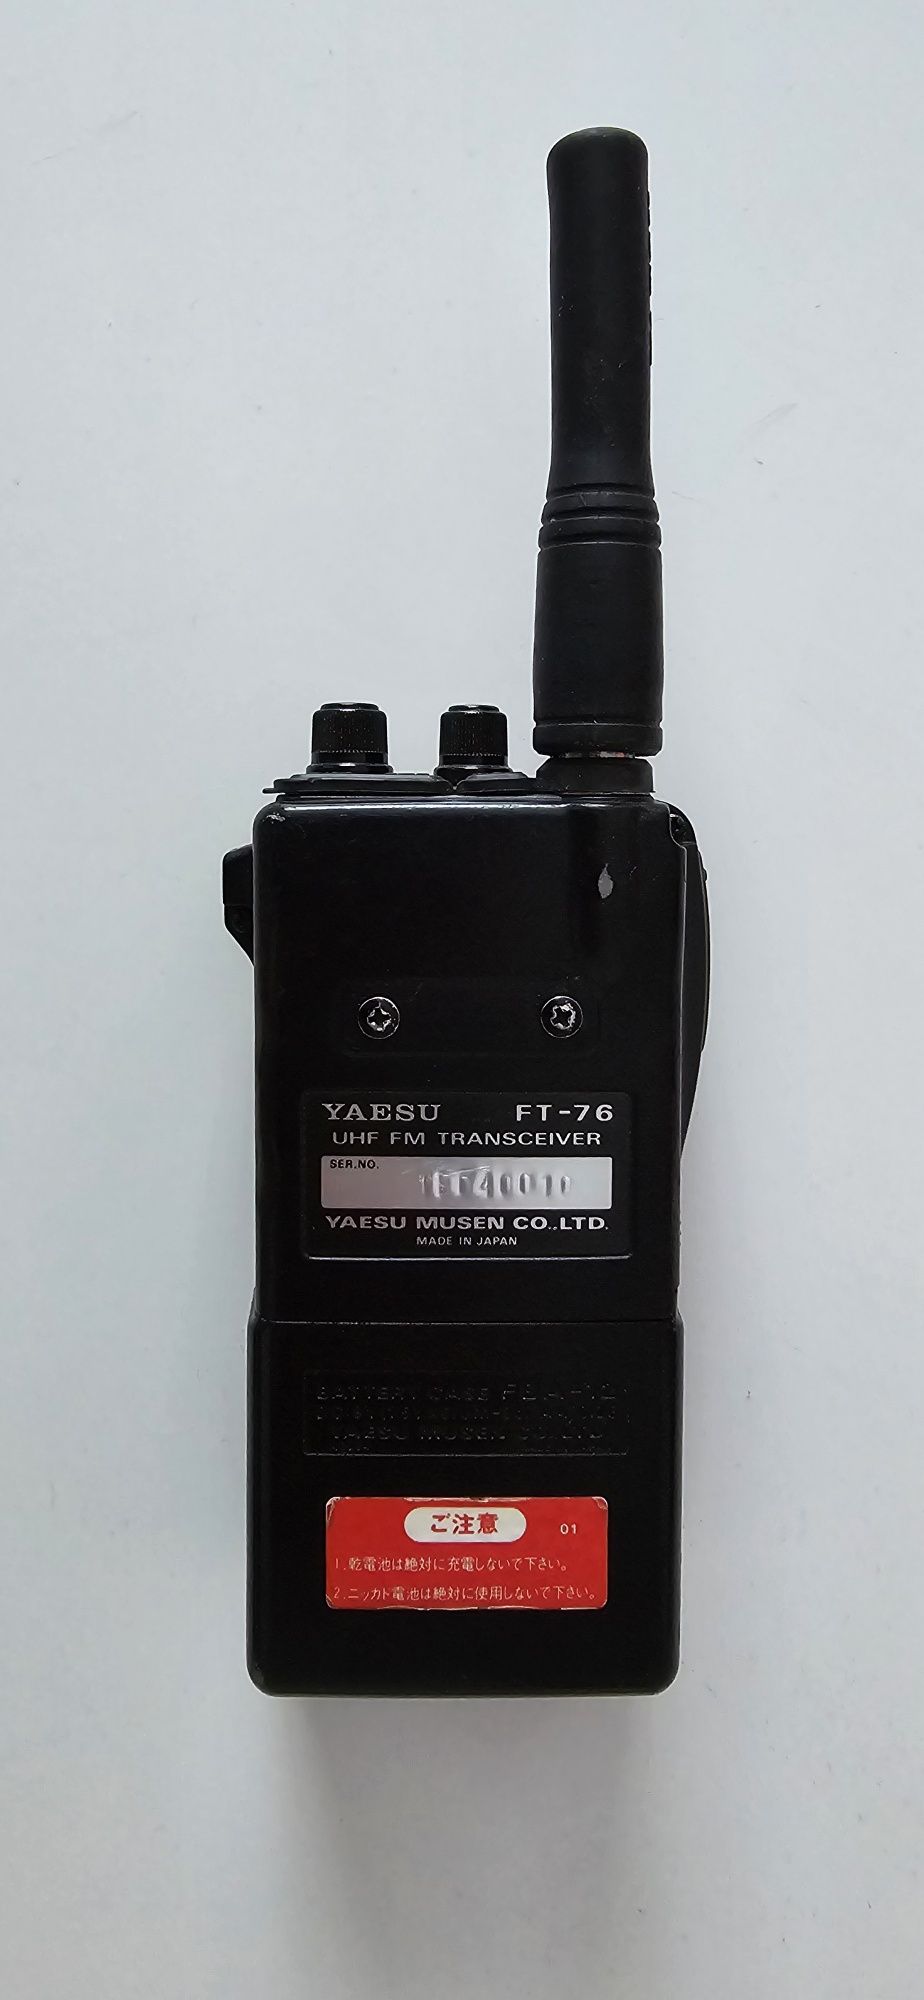 Statie Radio UHF Yaesu FT-76 Transceiver